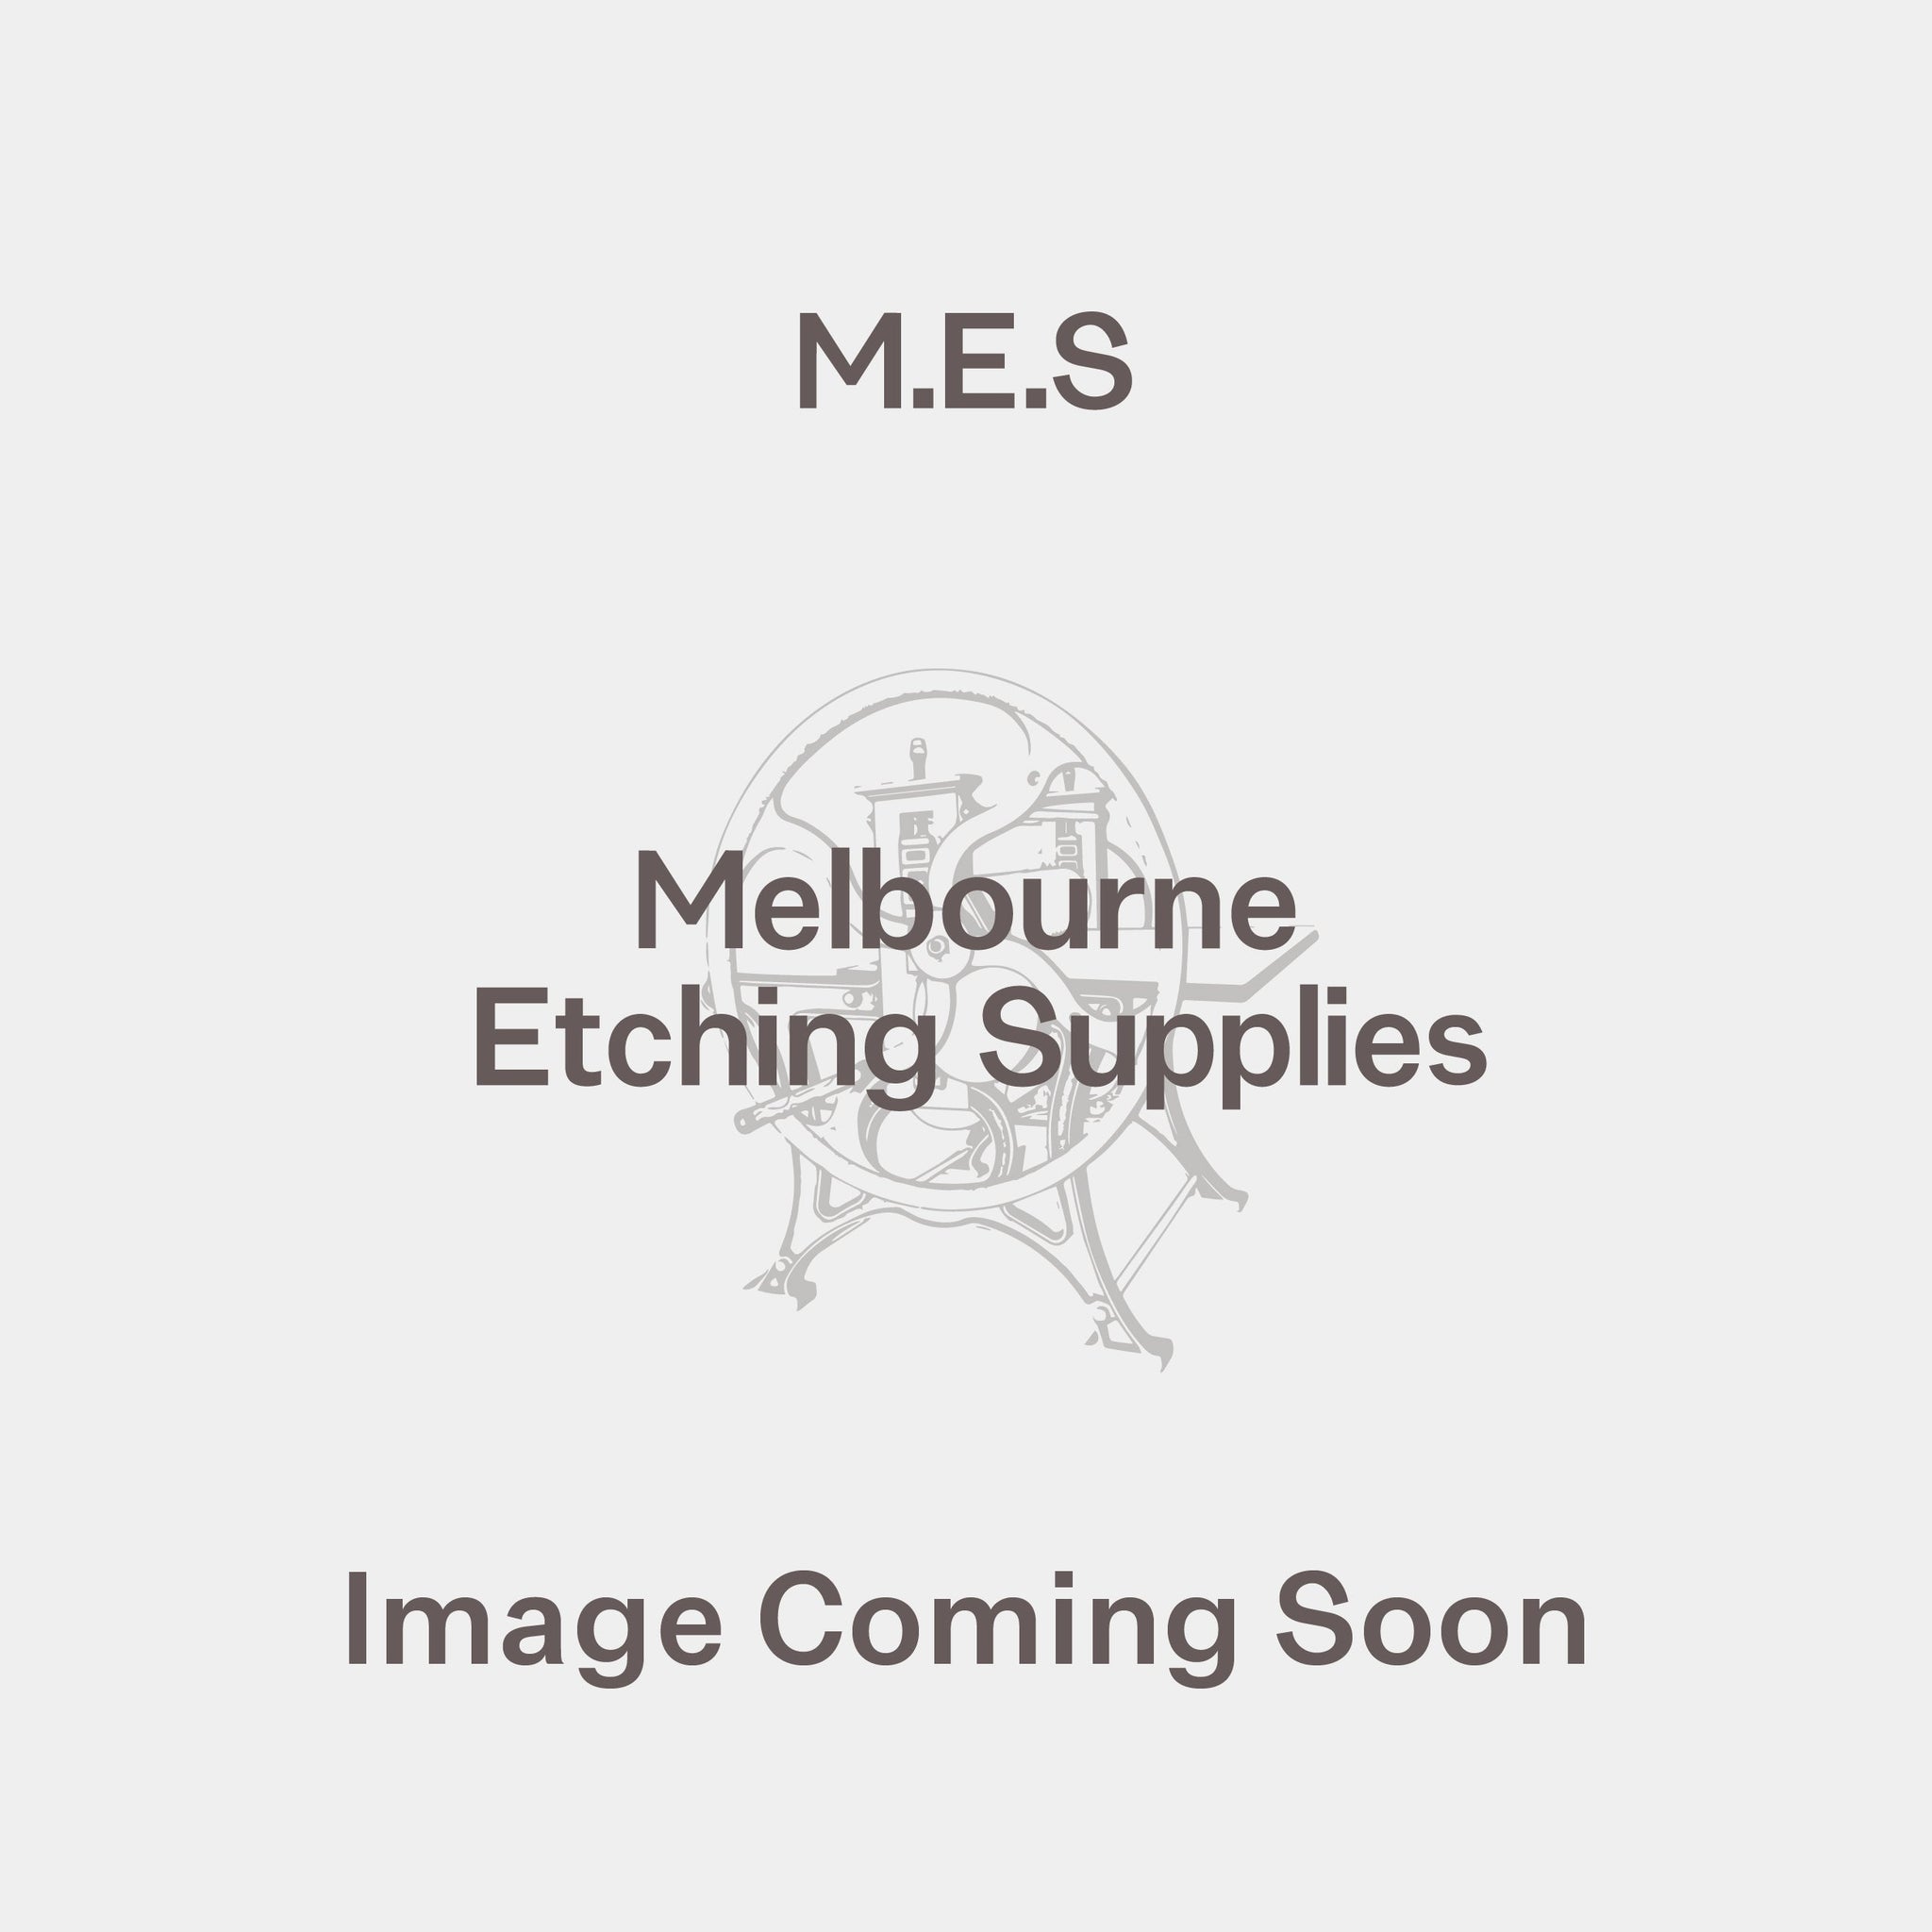 D7 Acrylic Primed Linen Medium Weave, 2.12mt wide (price per metre) - Melbourne Etching Supplies